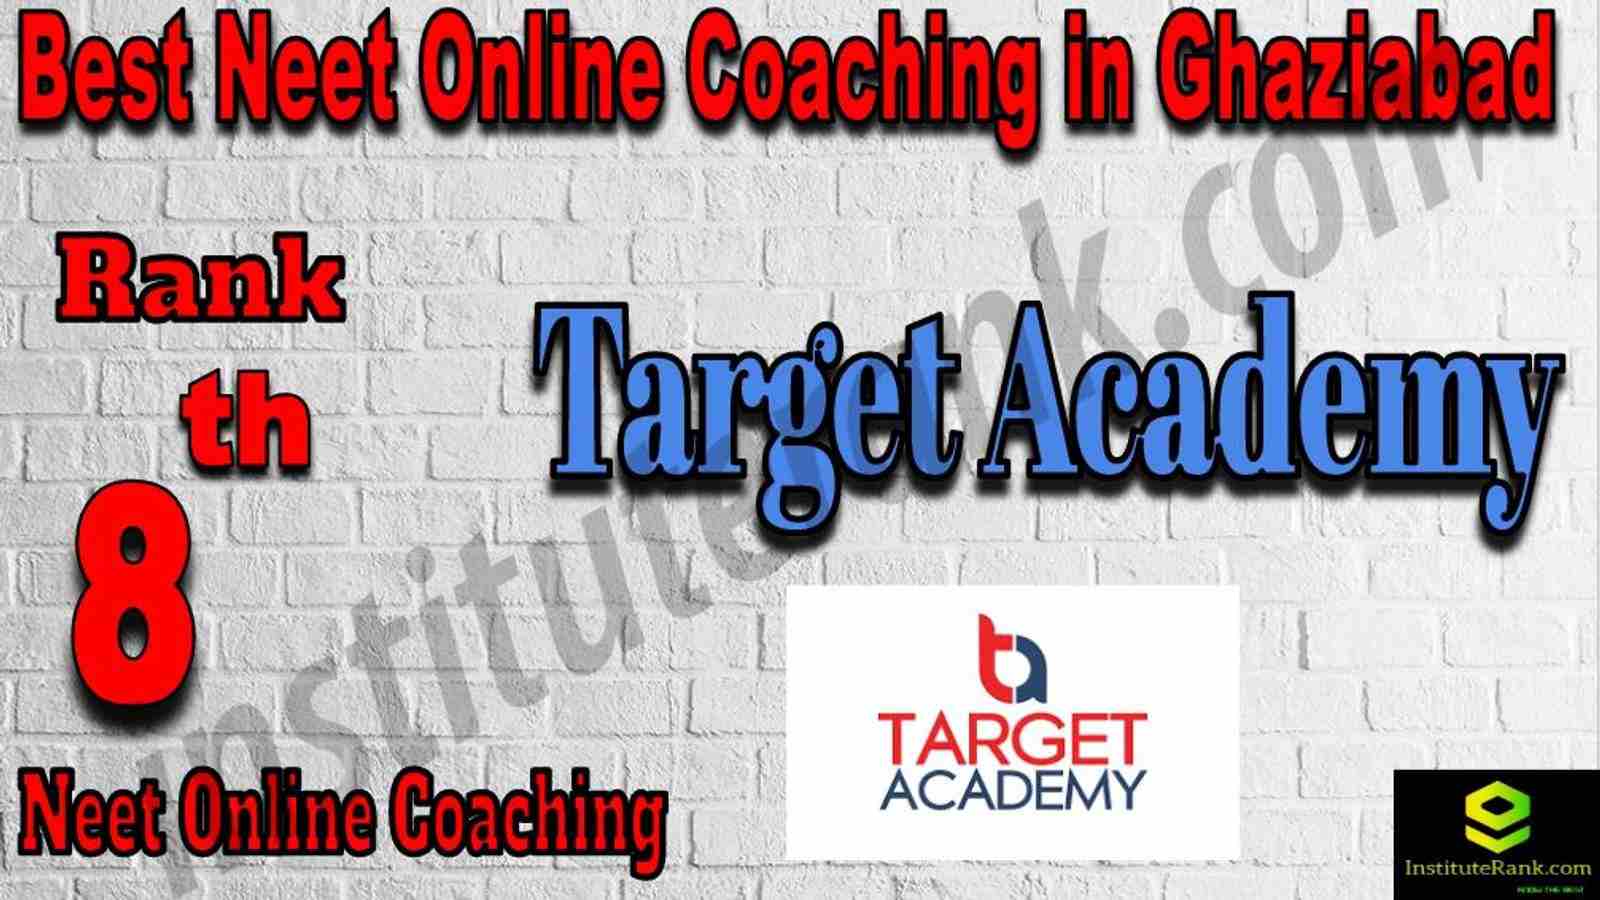 8th Best Neet Online Coaching in Ghaziabad